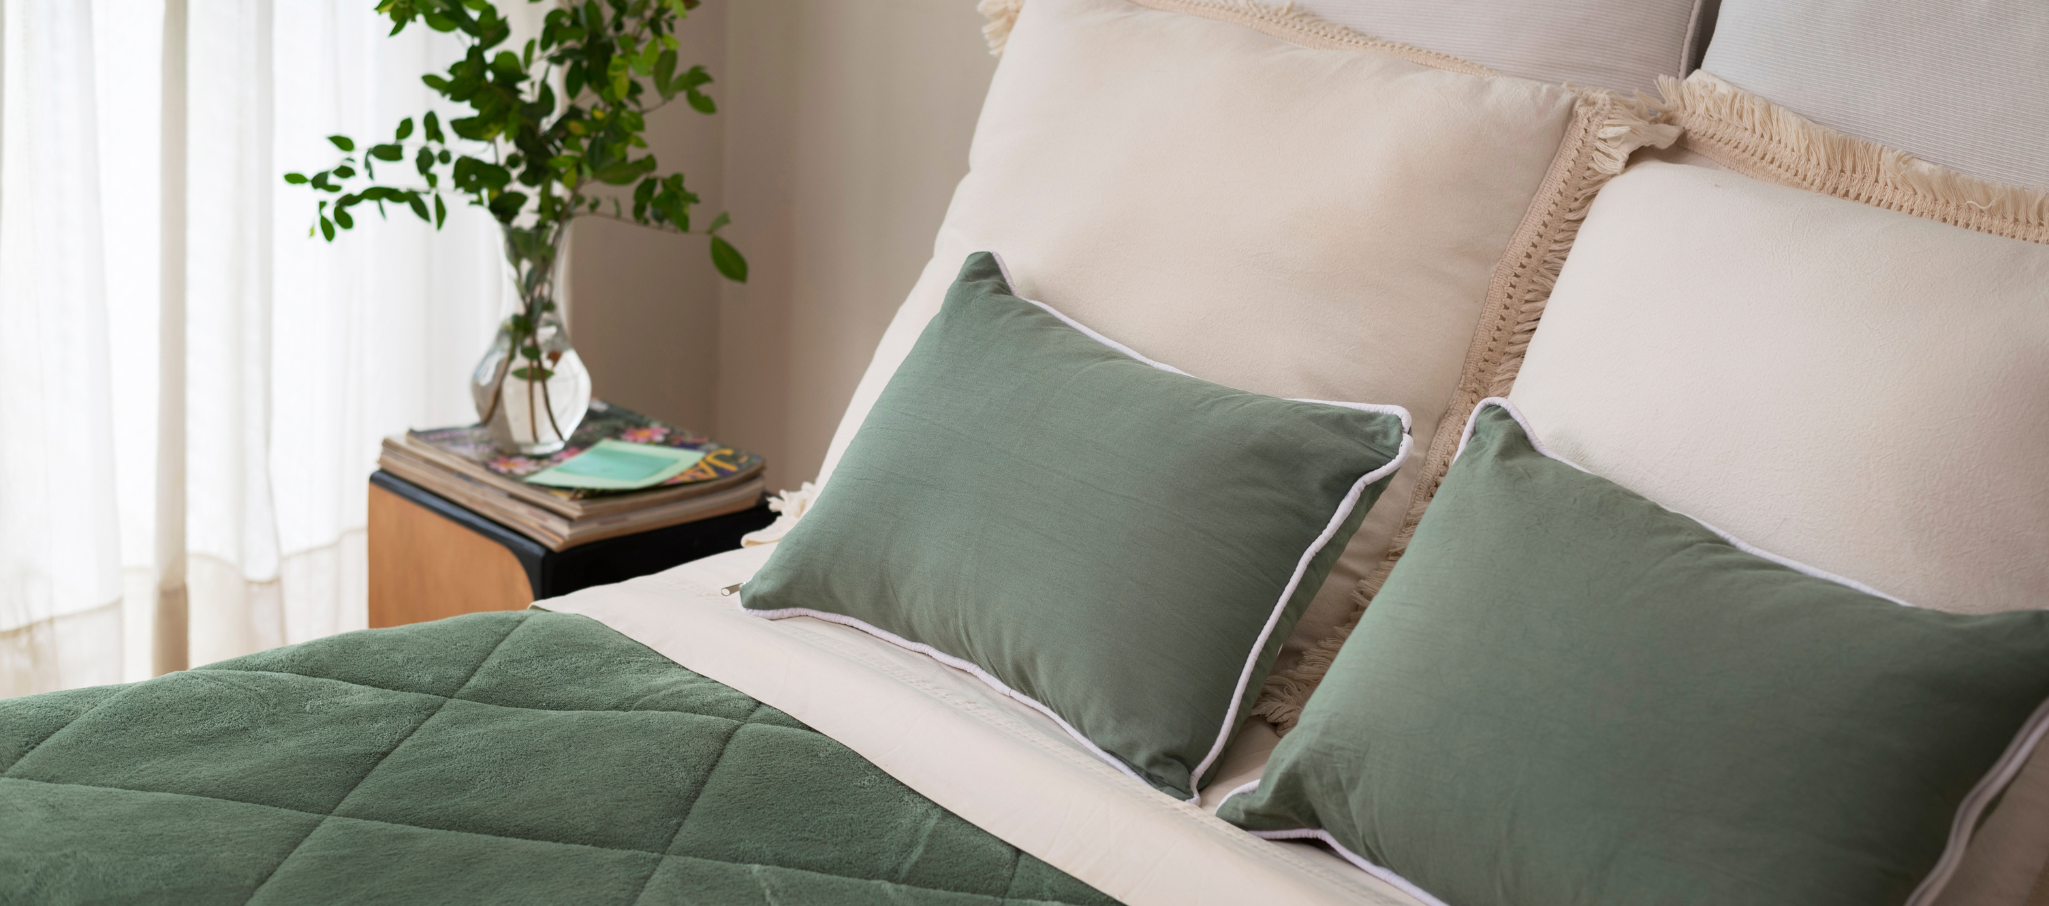 The benefits of eco-designed bedding